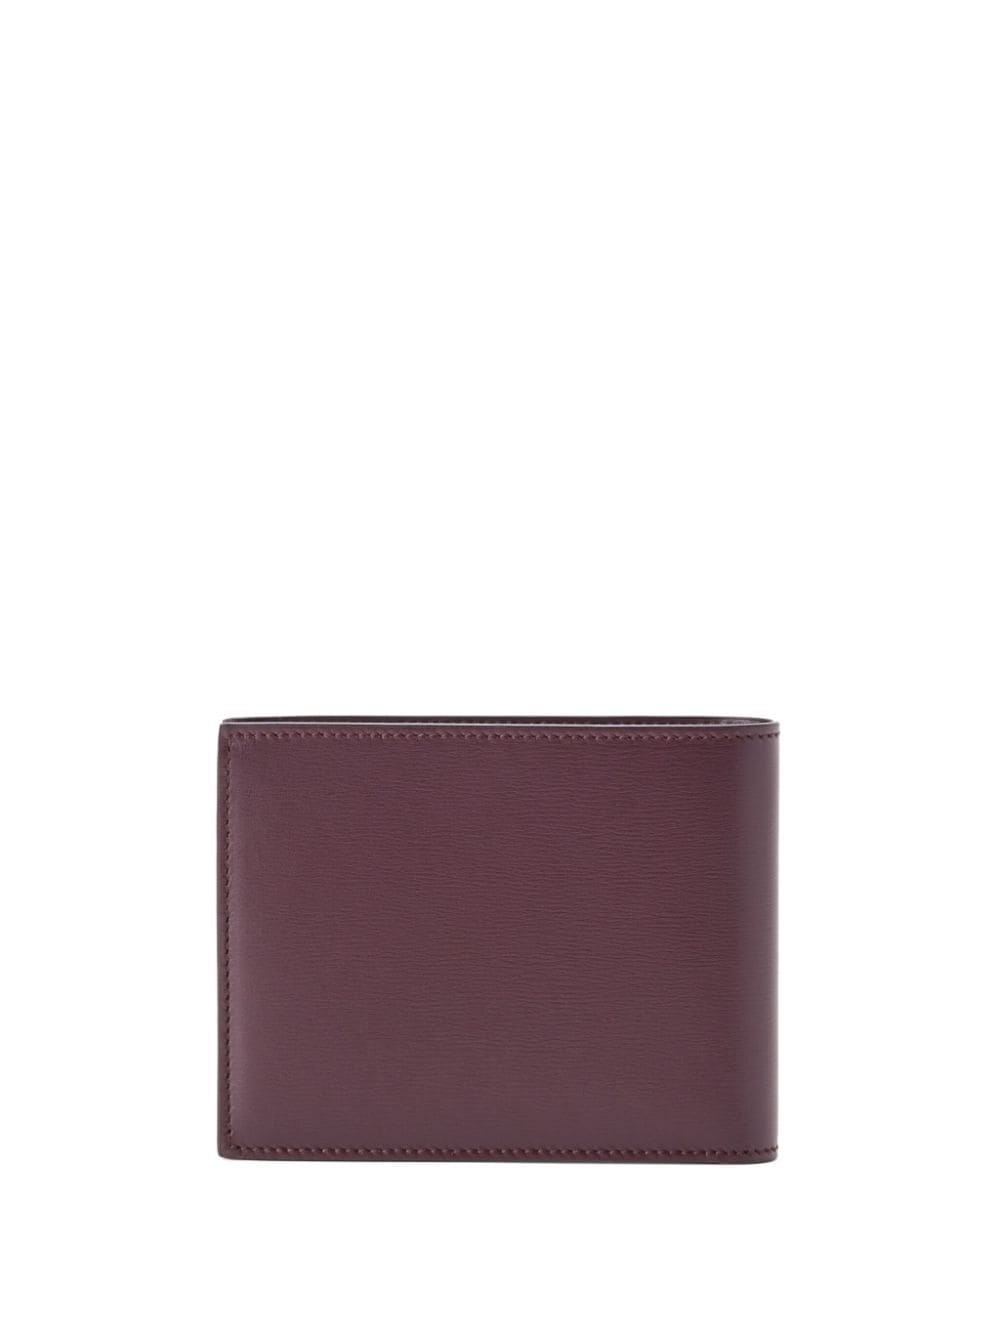 Classic bi-fold leather wallet - 2